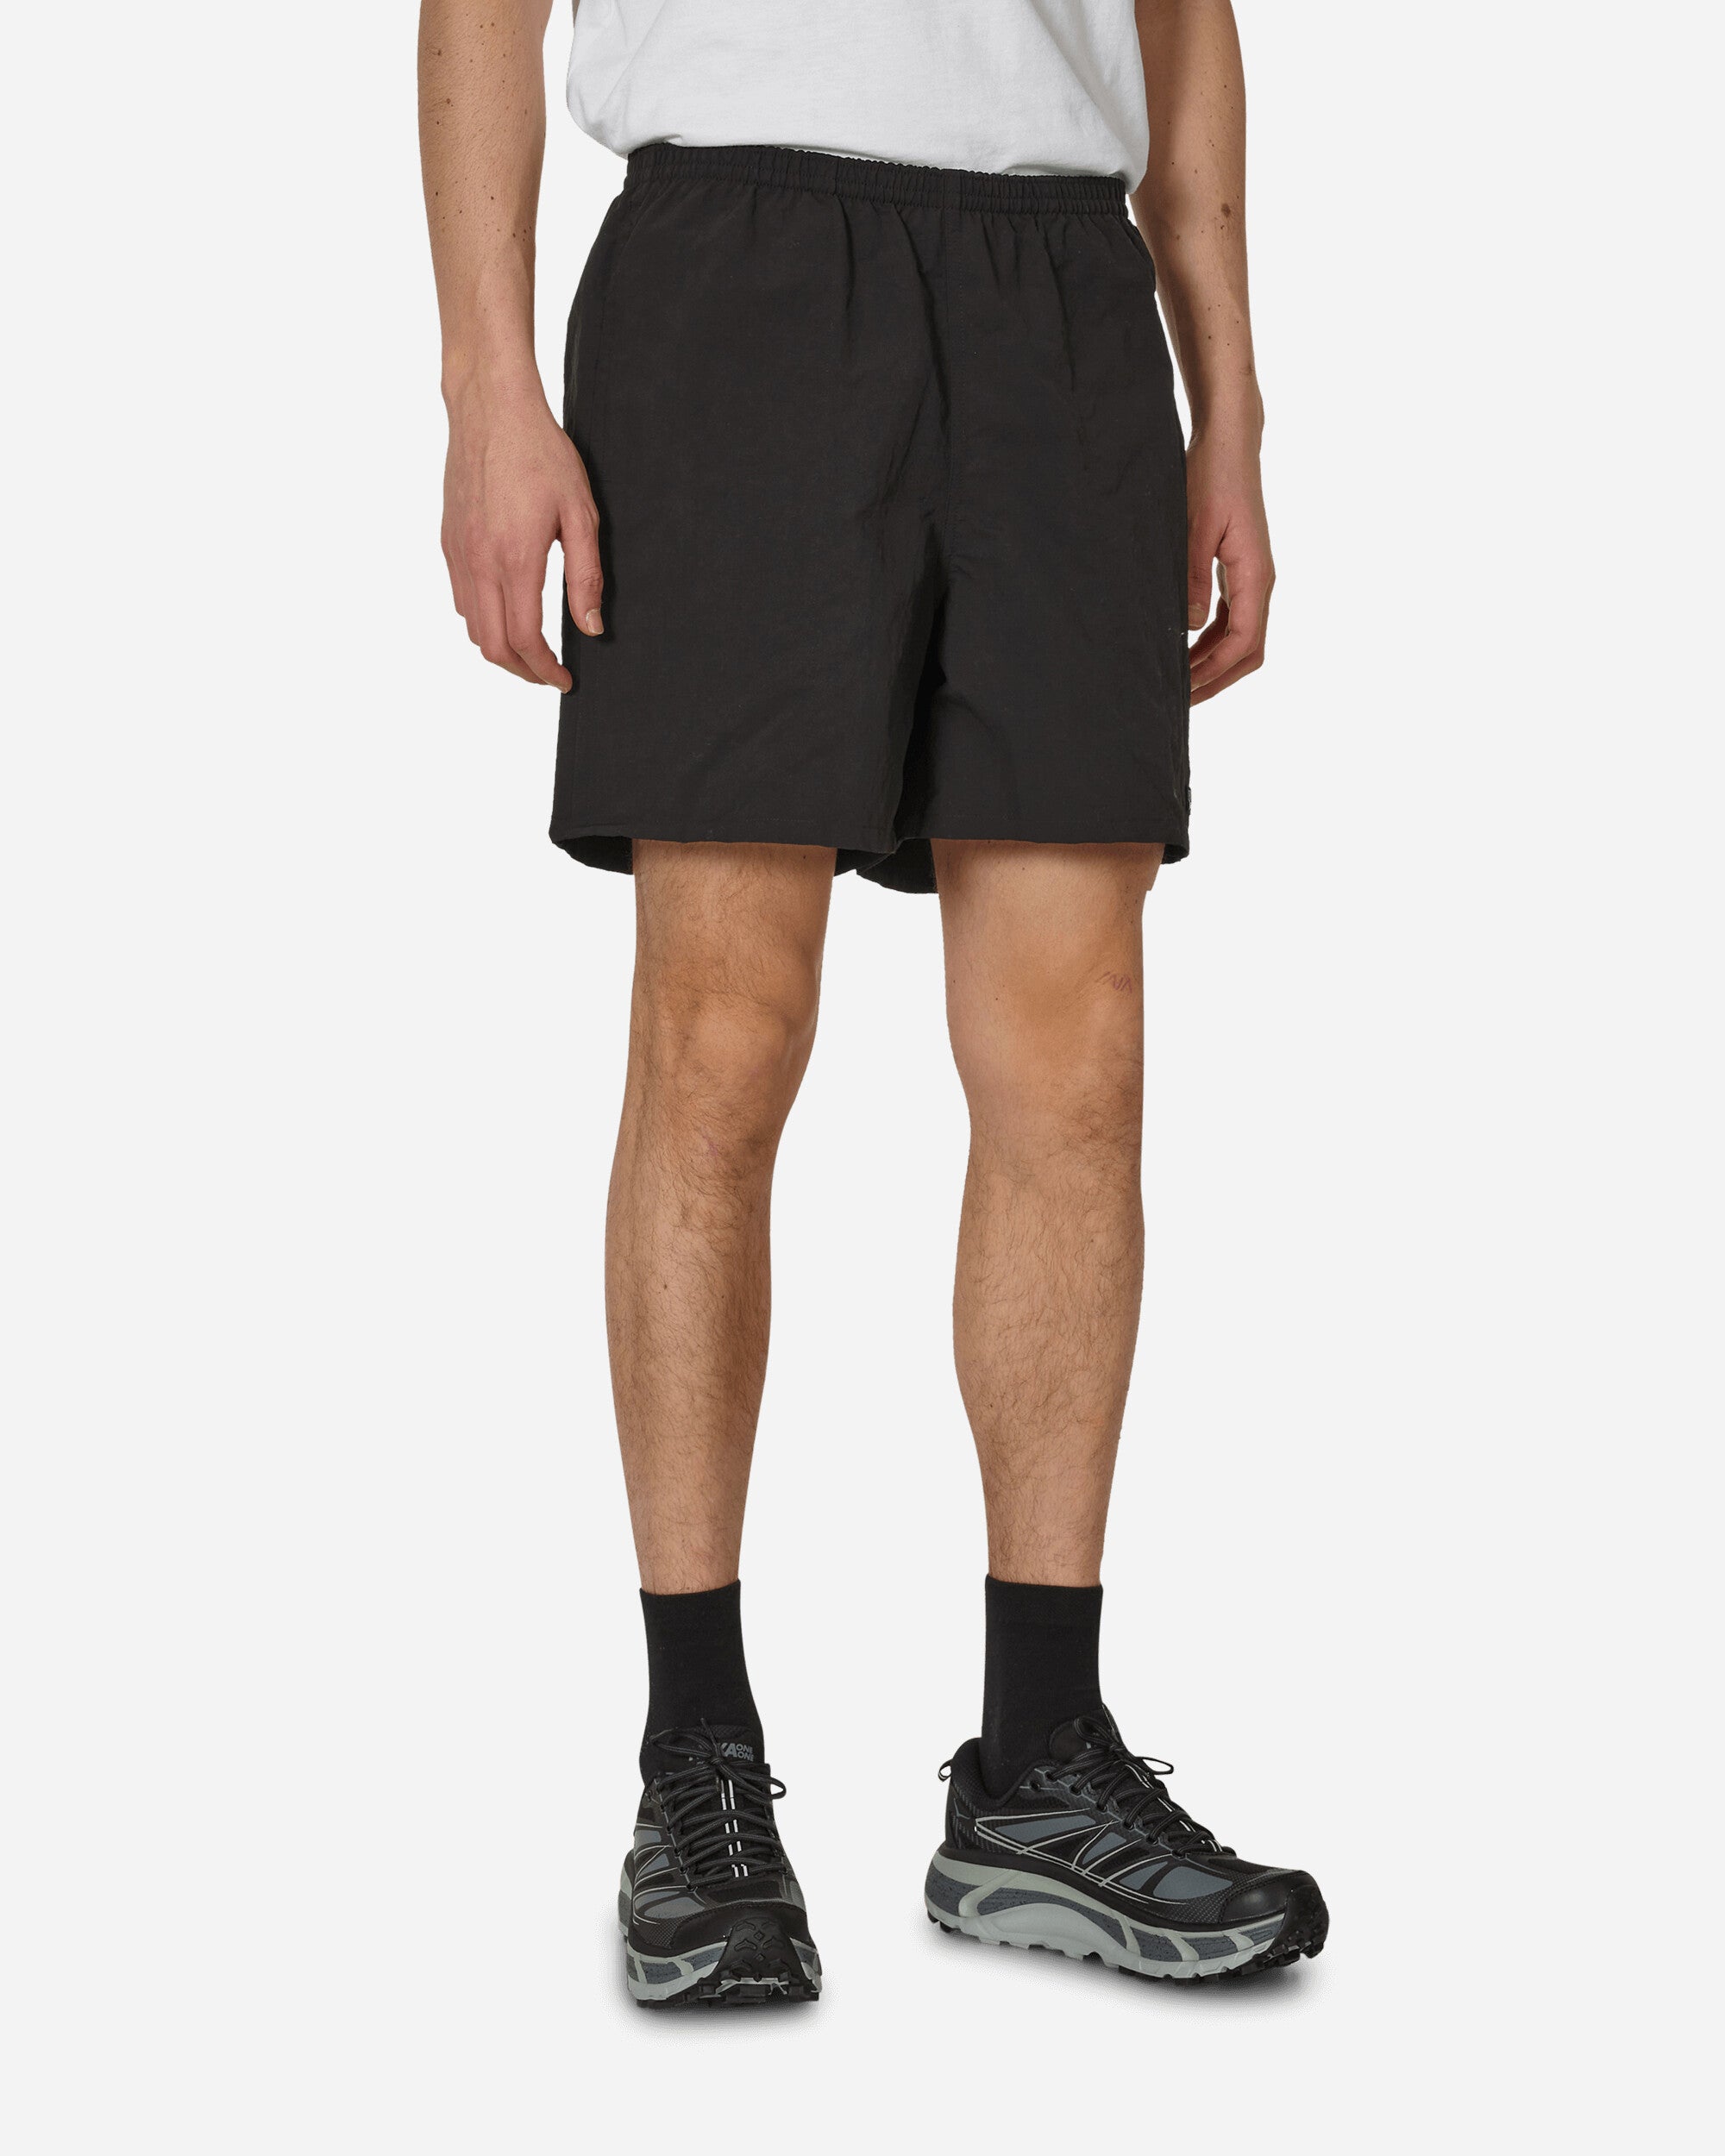 Patagonia Baggies Shorts - 5 In Black Shorts Short 57022 BLK